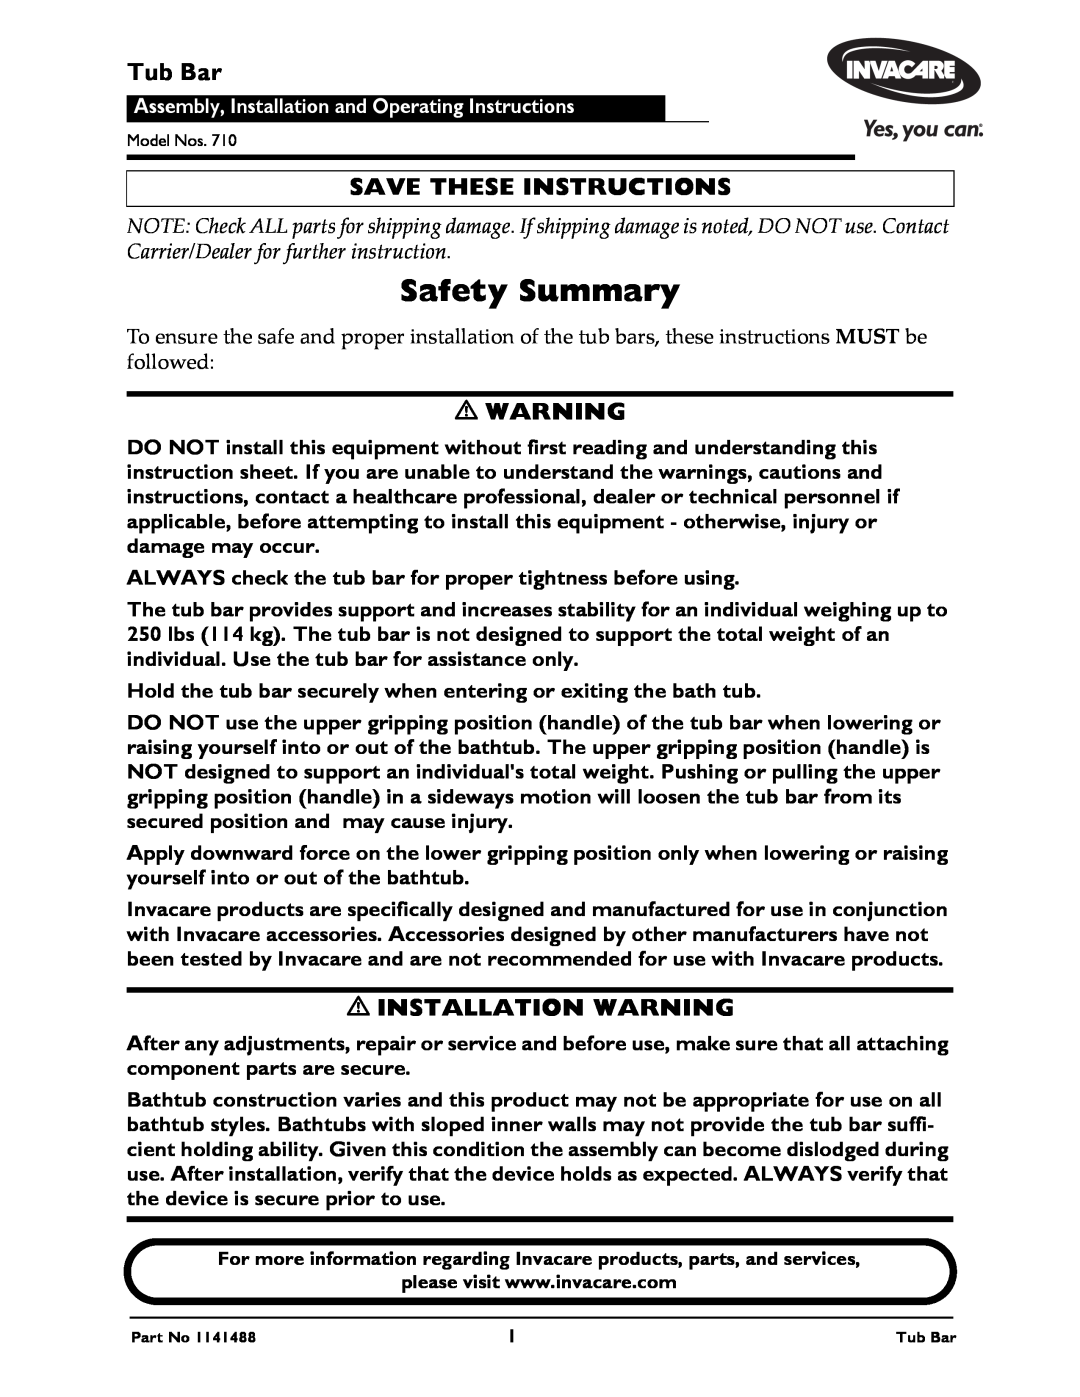 Invacare 710 instruction sheet Safety Summary, Tub Bar, Save These Instructions, Installation Warning 